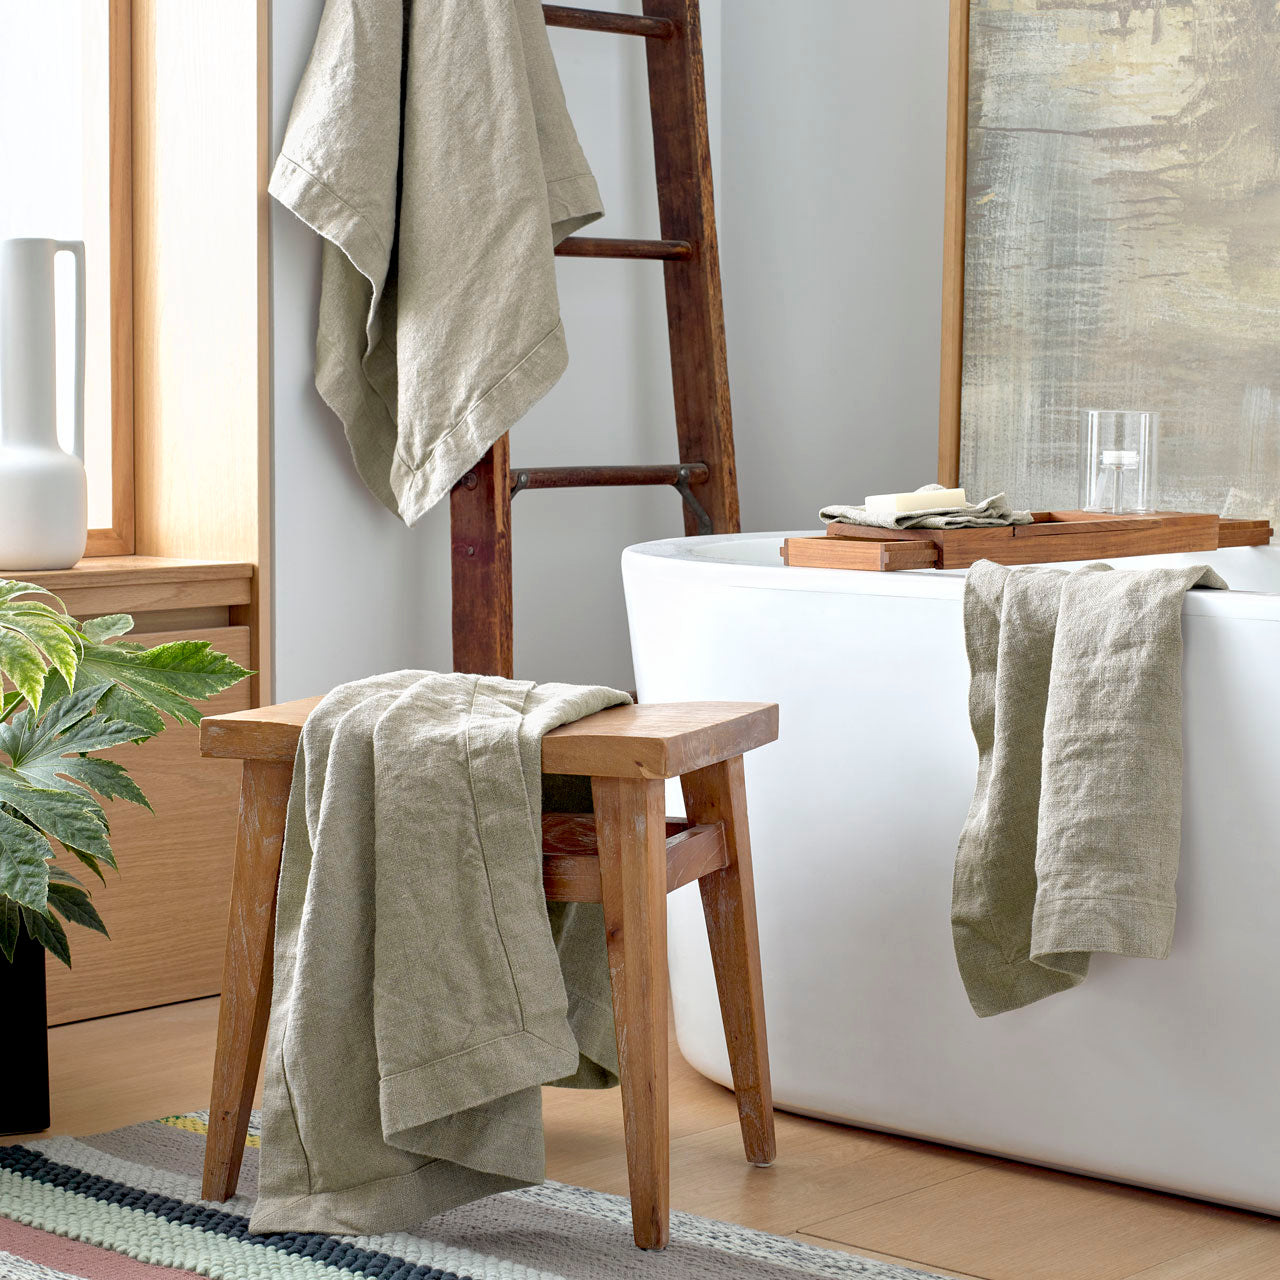 100% Linen Dish Towels - Linen Hand Towels from Good Linens